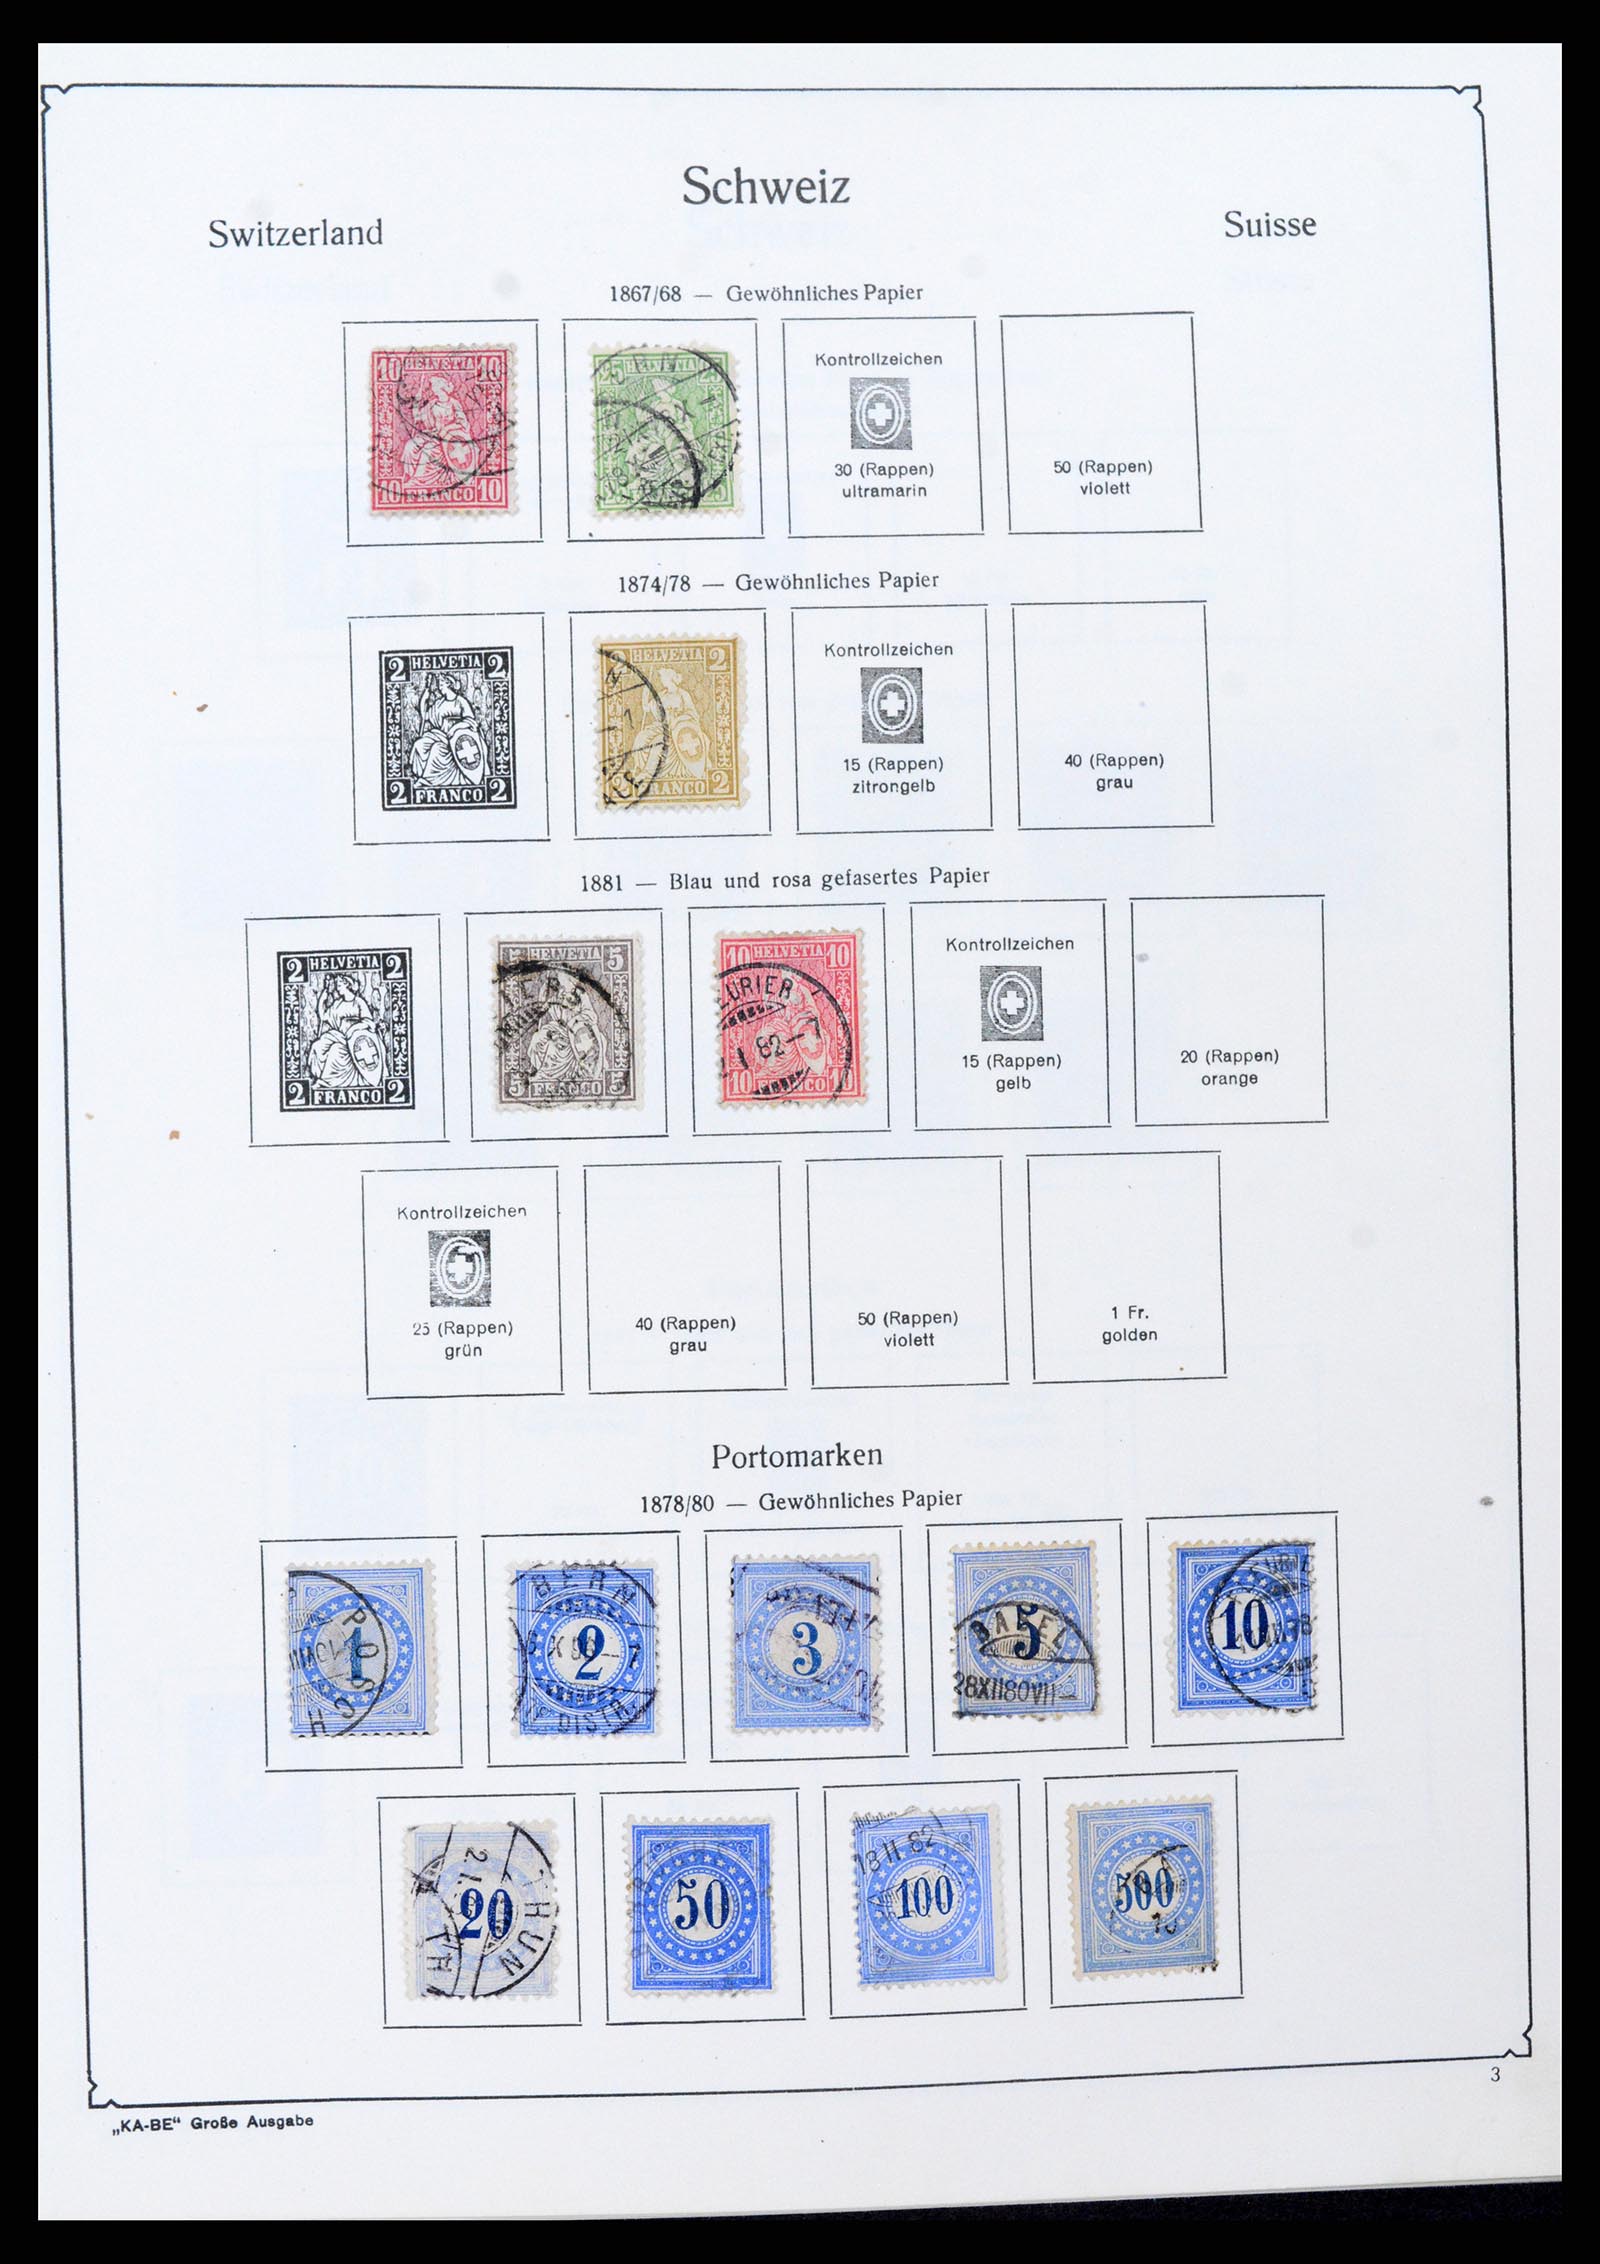 37588 002 - Stamp collection 37588 Switzerland 1854-1974.